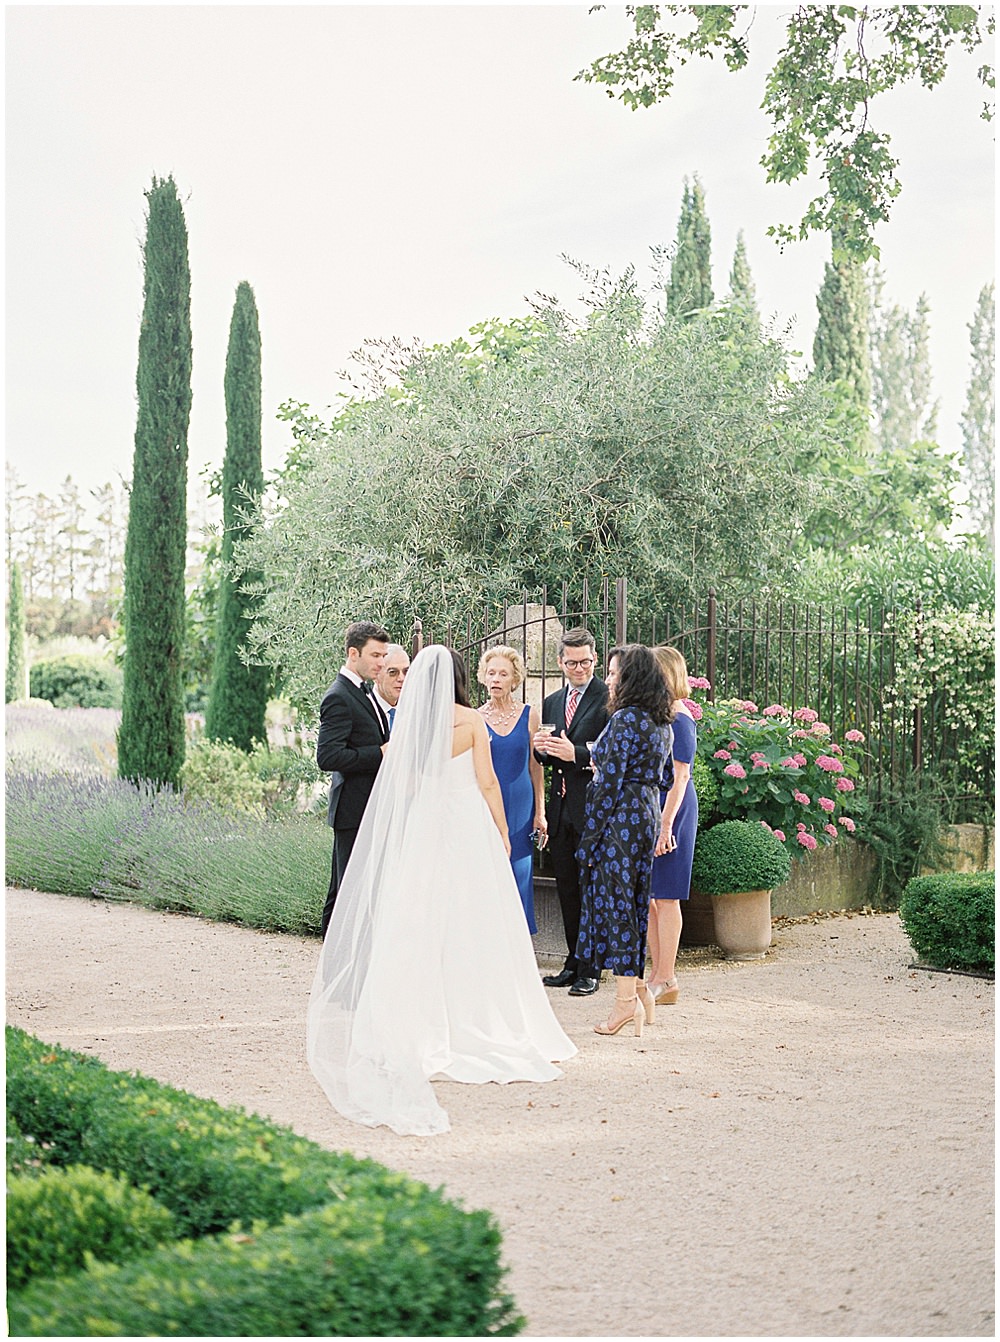 Wedding at Clos Saint Esteve, Provence wedding, Clos saint Esteve, Lavender fields wedding, french wedding, france wedding photographer